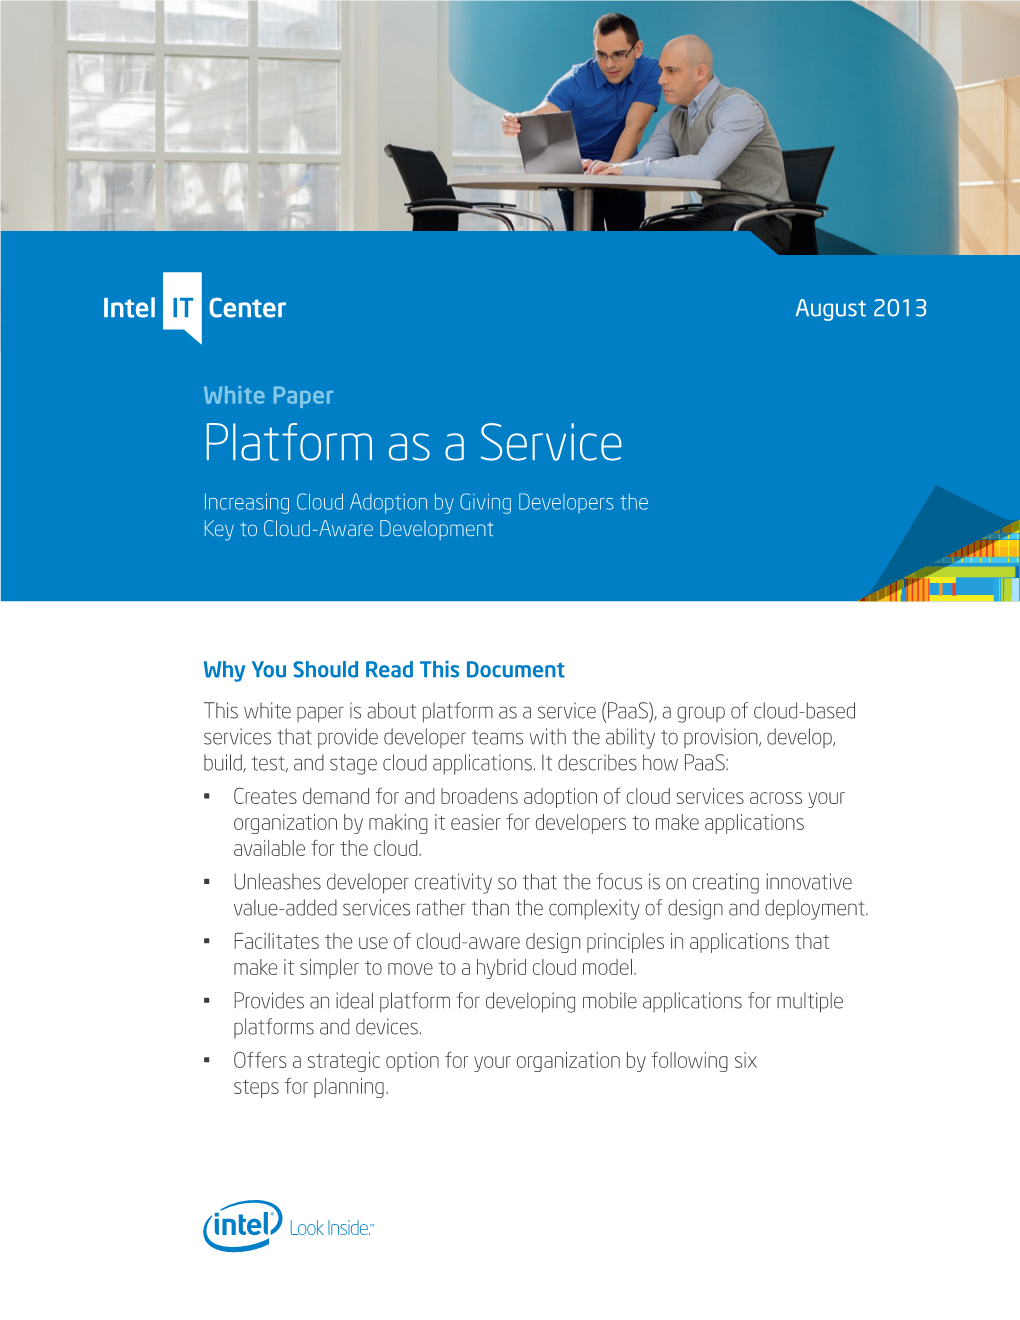 Platform As a Service (Paas) Drives Cloud Demand